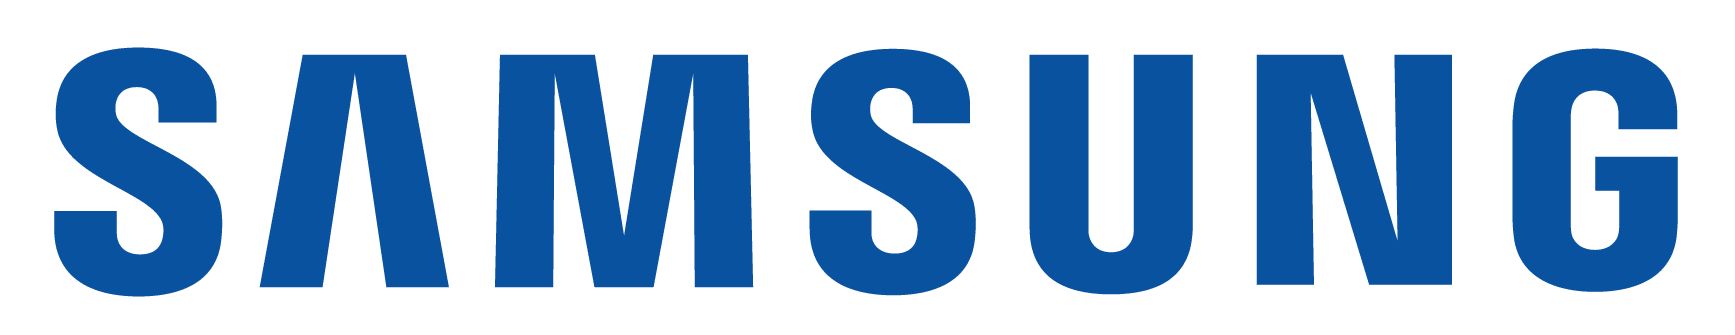 Samsung_logo_PNG2